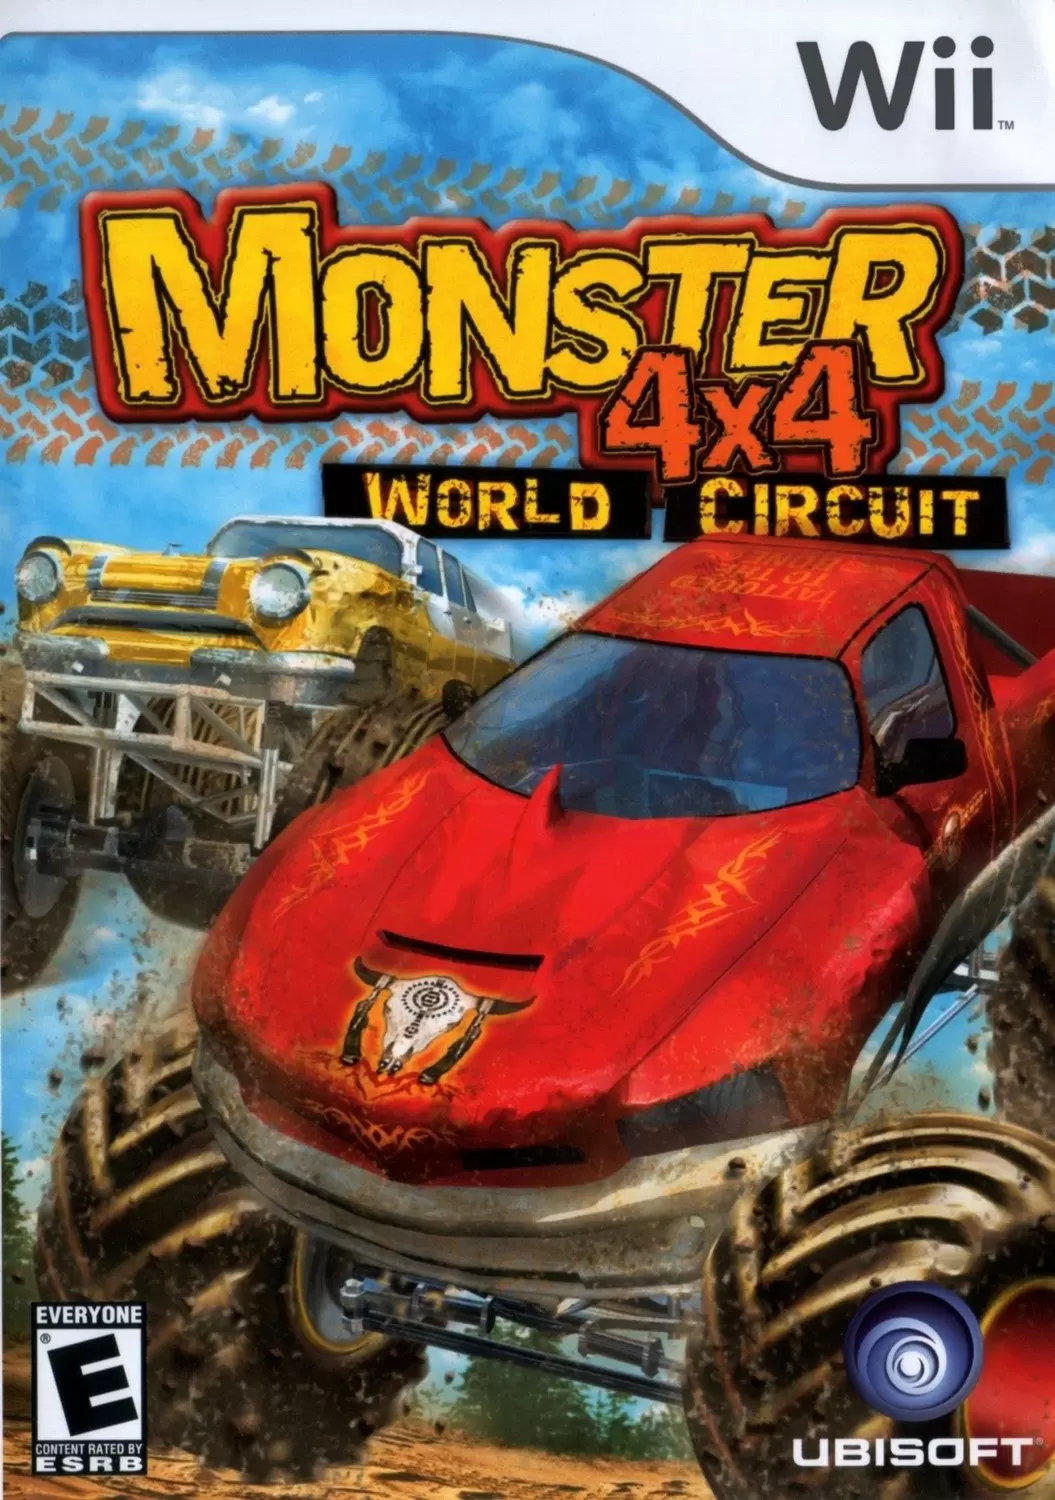 Nintendo Wii Games - Monster 4x4: World Circuit